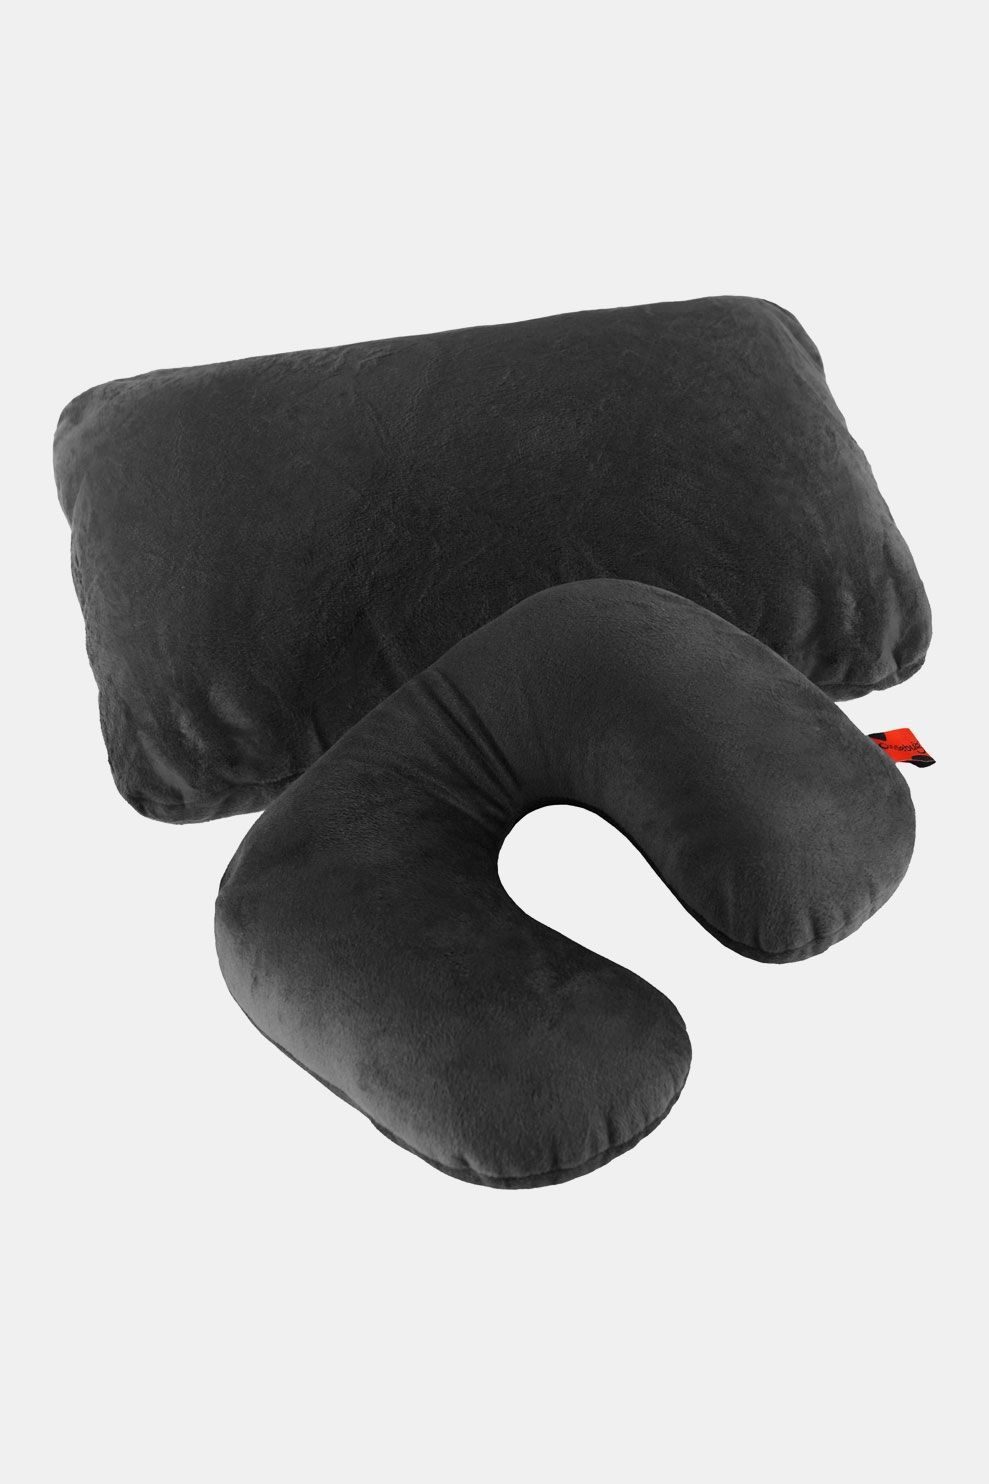 De Cuddlebug 2-in-1 Pillow zwart